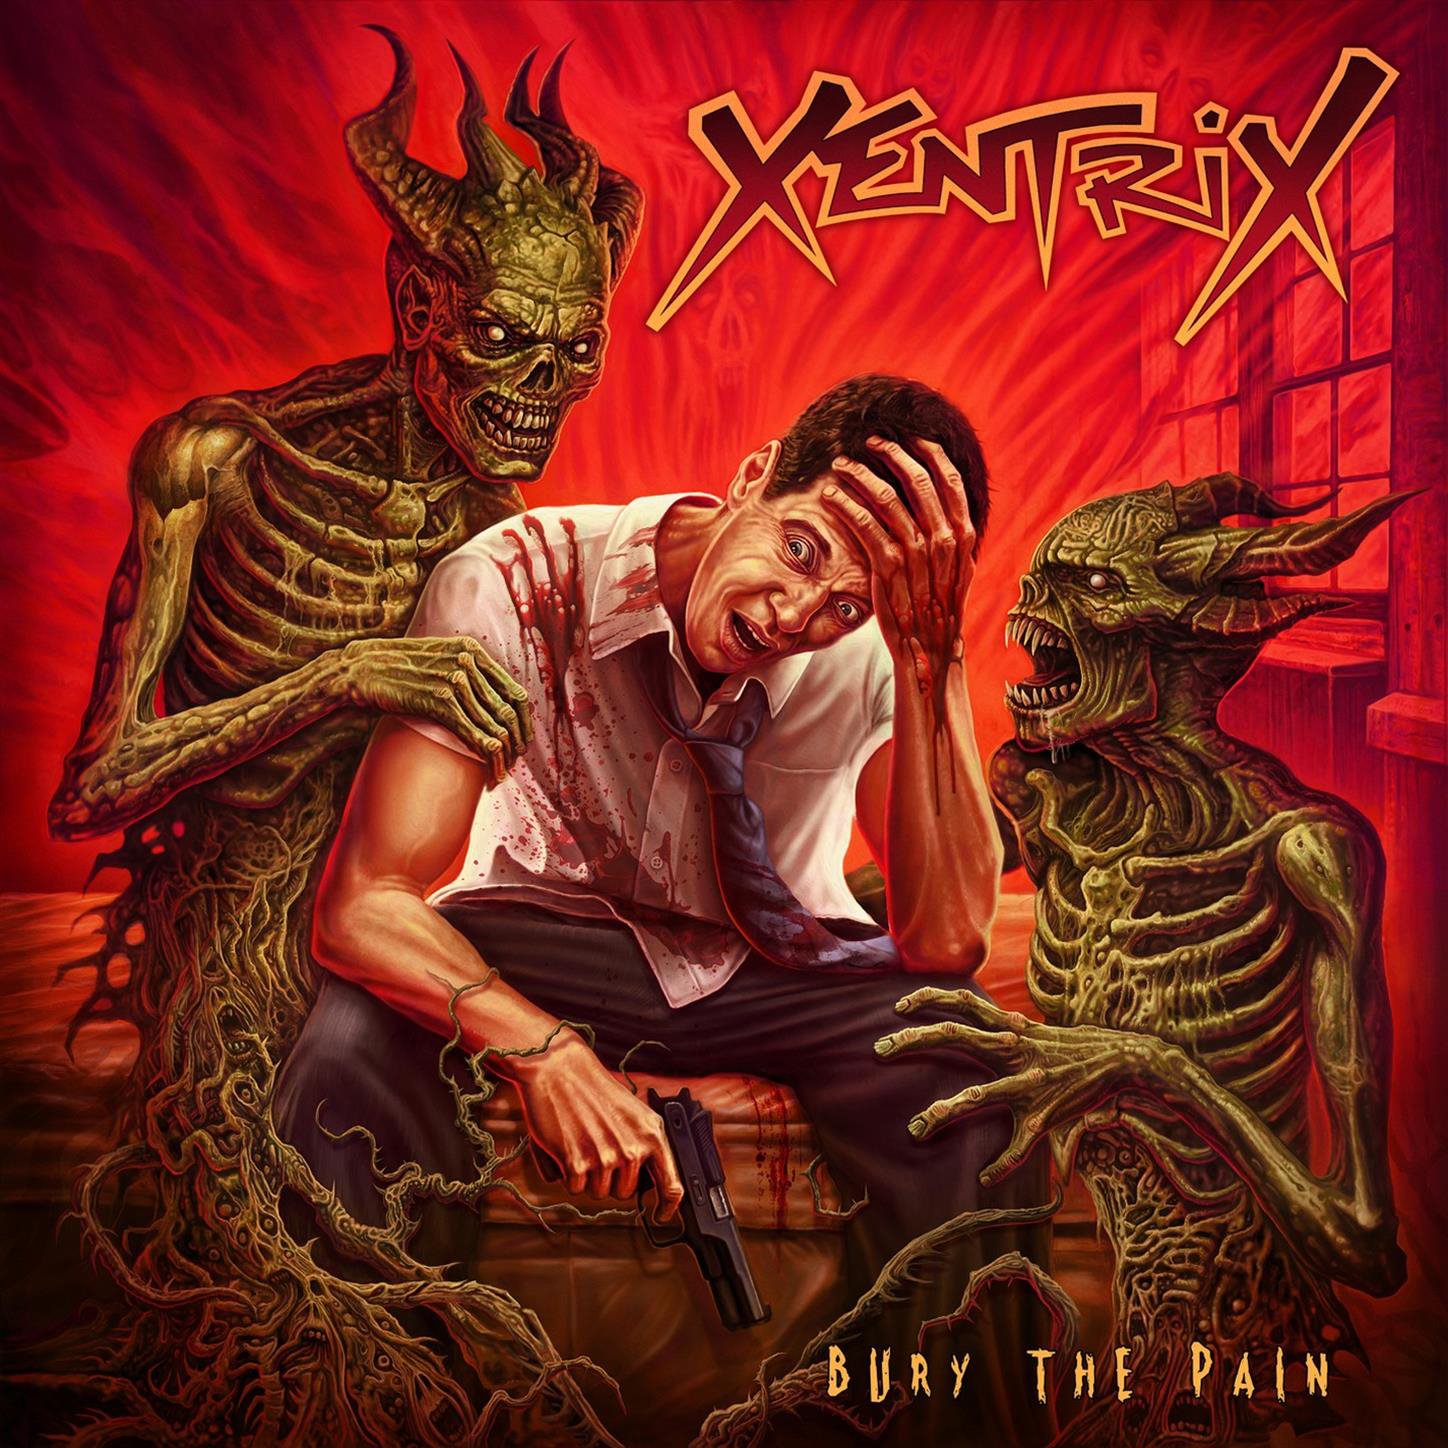 Let the world burn. Pain группа обложки. Альбомы трэш метал групп. Xentrix 1990.